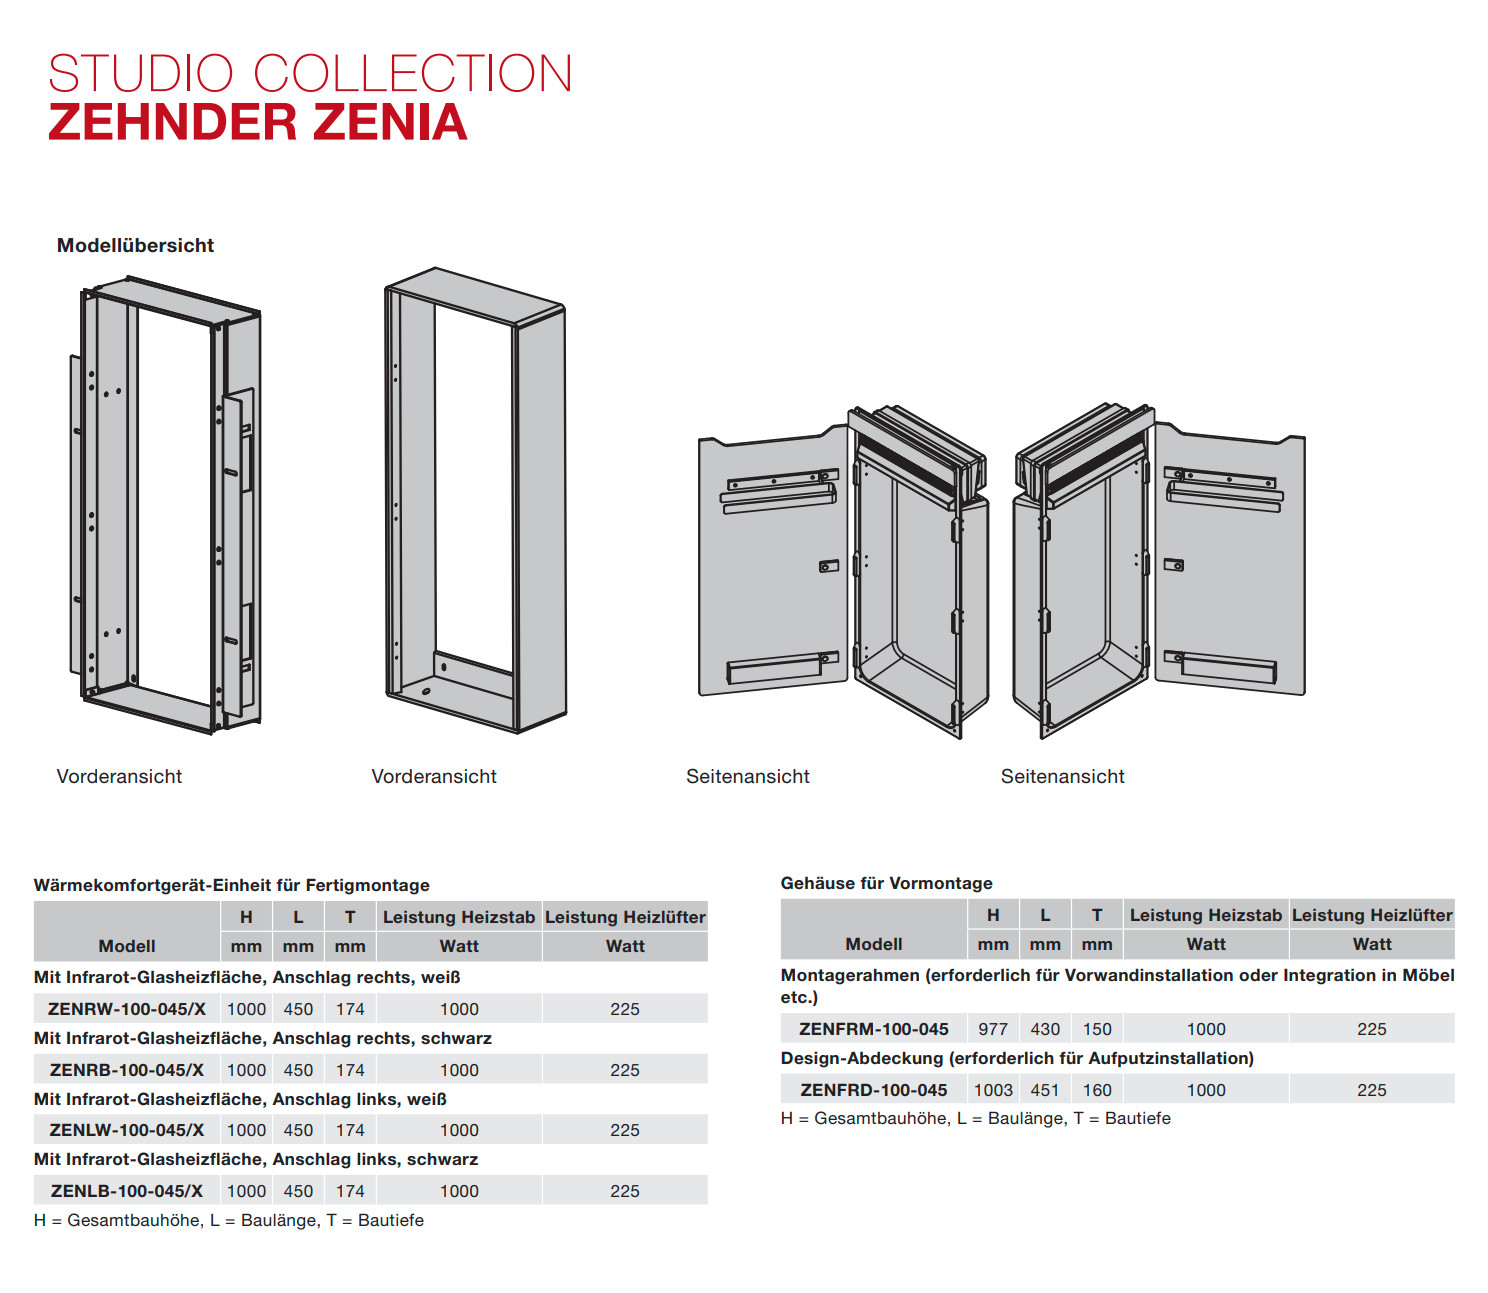 https://raleo.de:443/files/img/11ed4fbe87f033c08eb731a56a239745/original_size/Zehnder-Bad-Design-Heizkoerper-Radiator-Zenia-tech-1.jpg